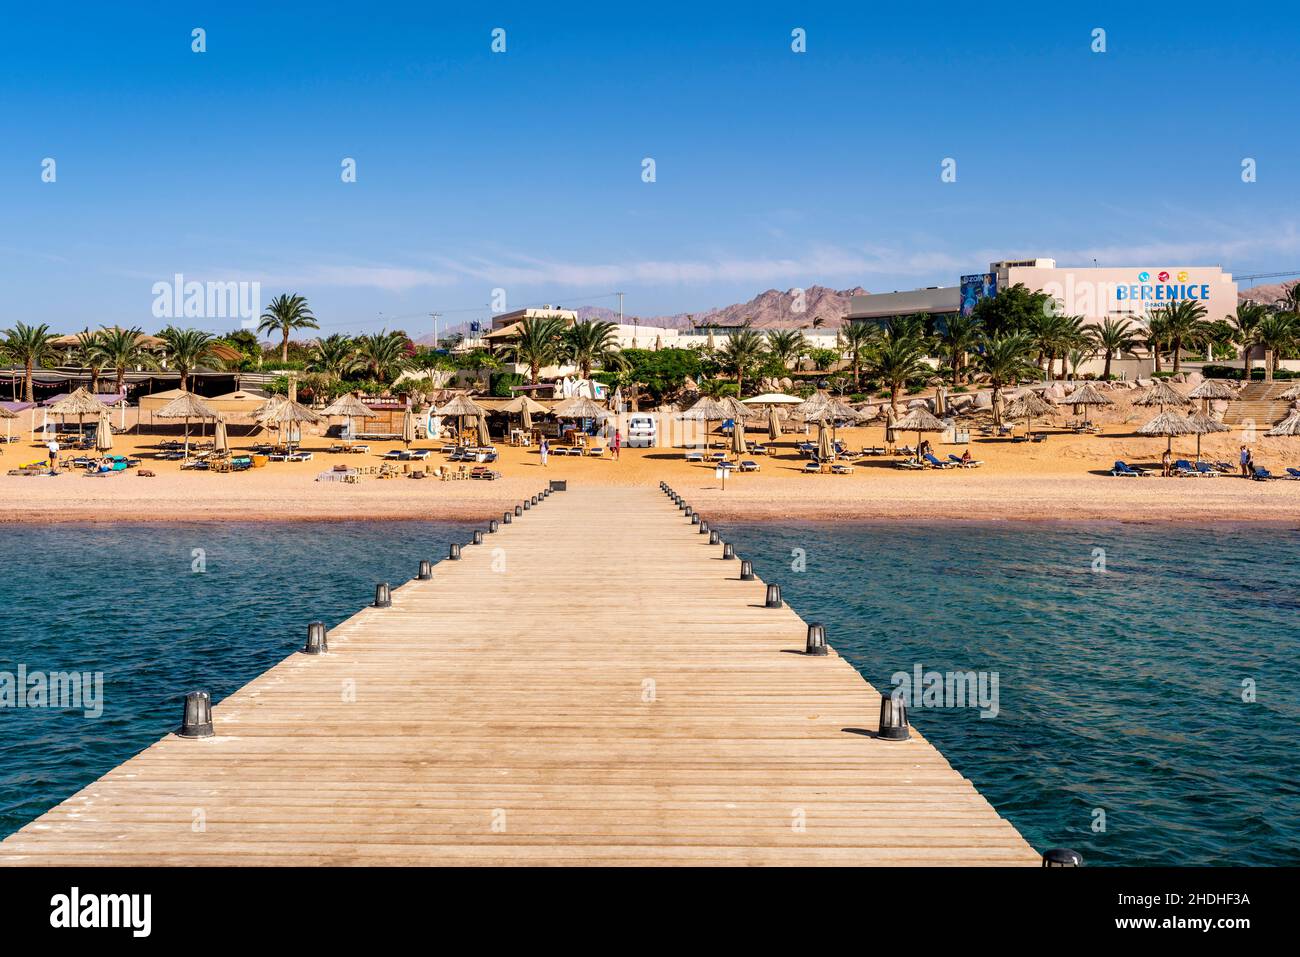 La playa en el Berenice Beach Club, Aqaba, provincia de Aqaba, Jordania. Foto de stock